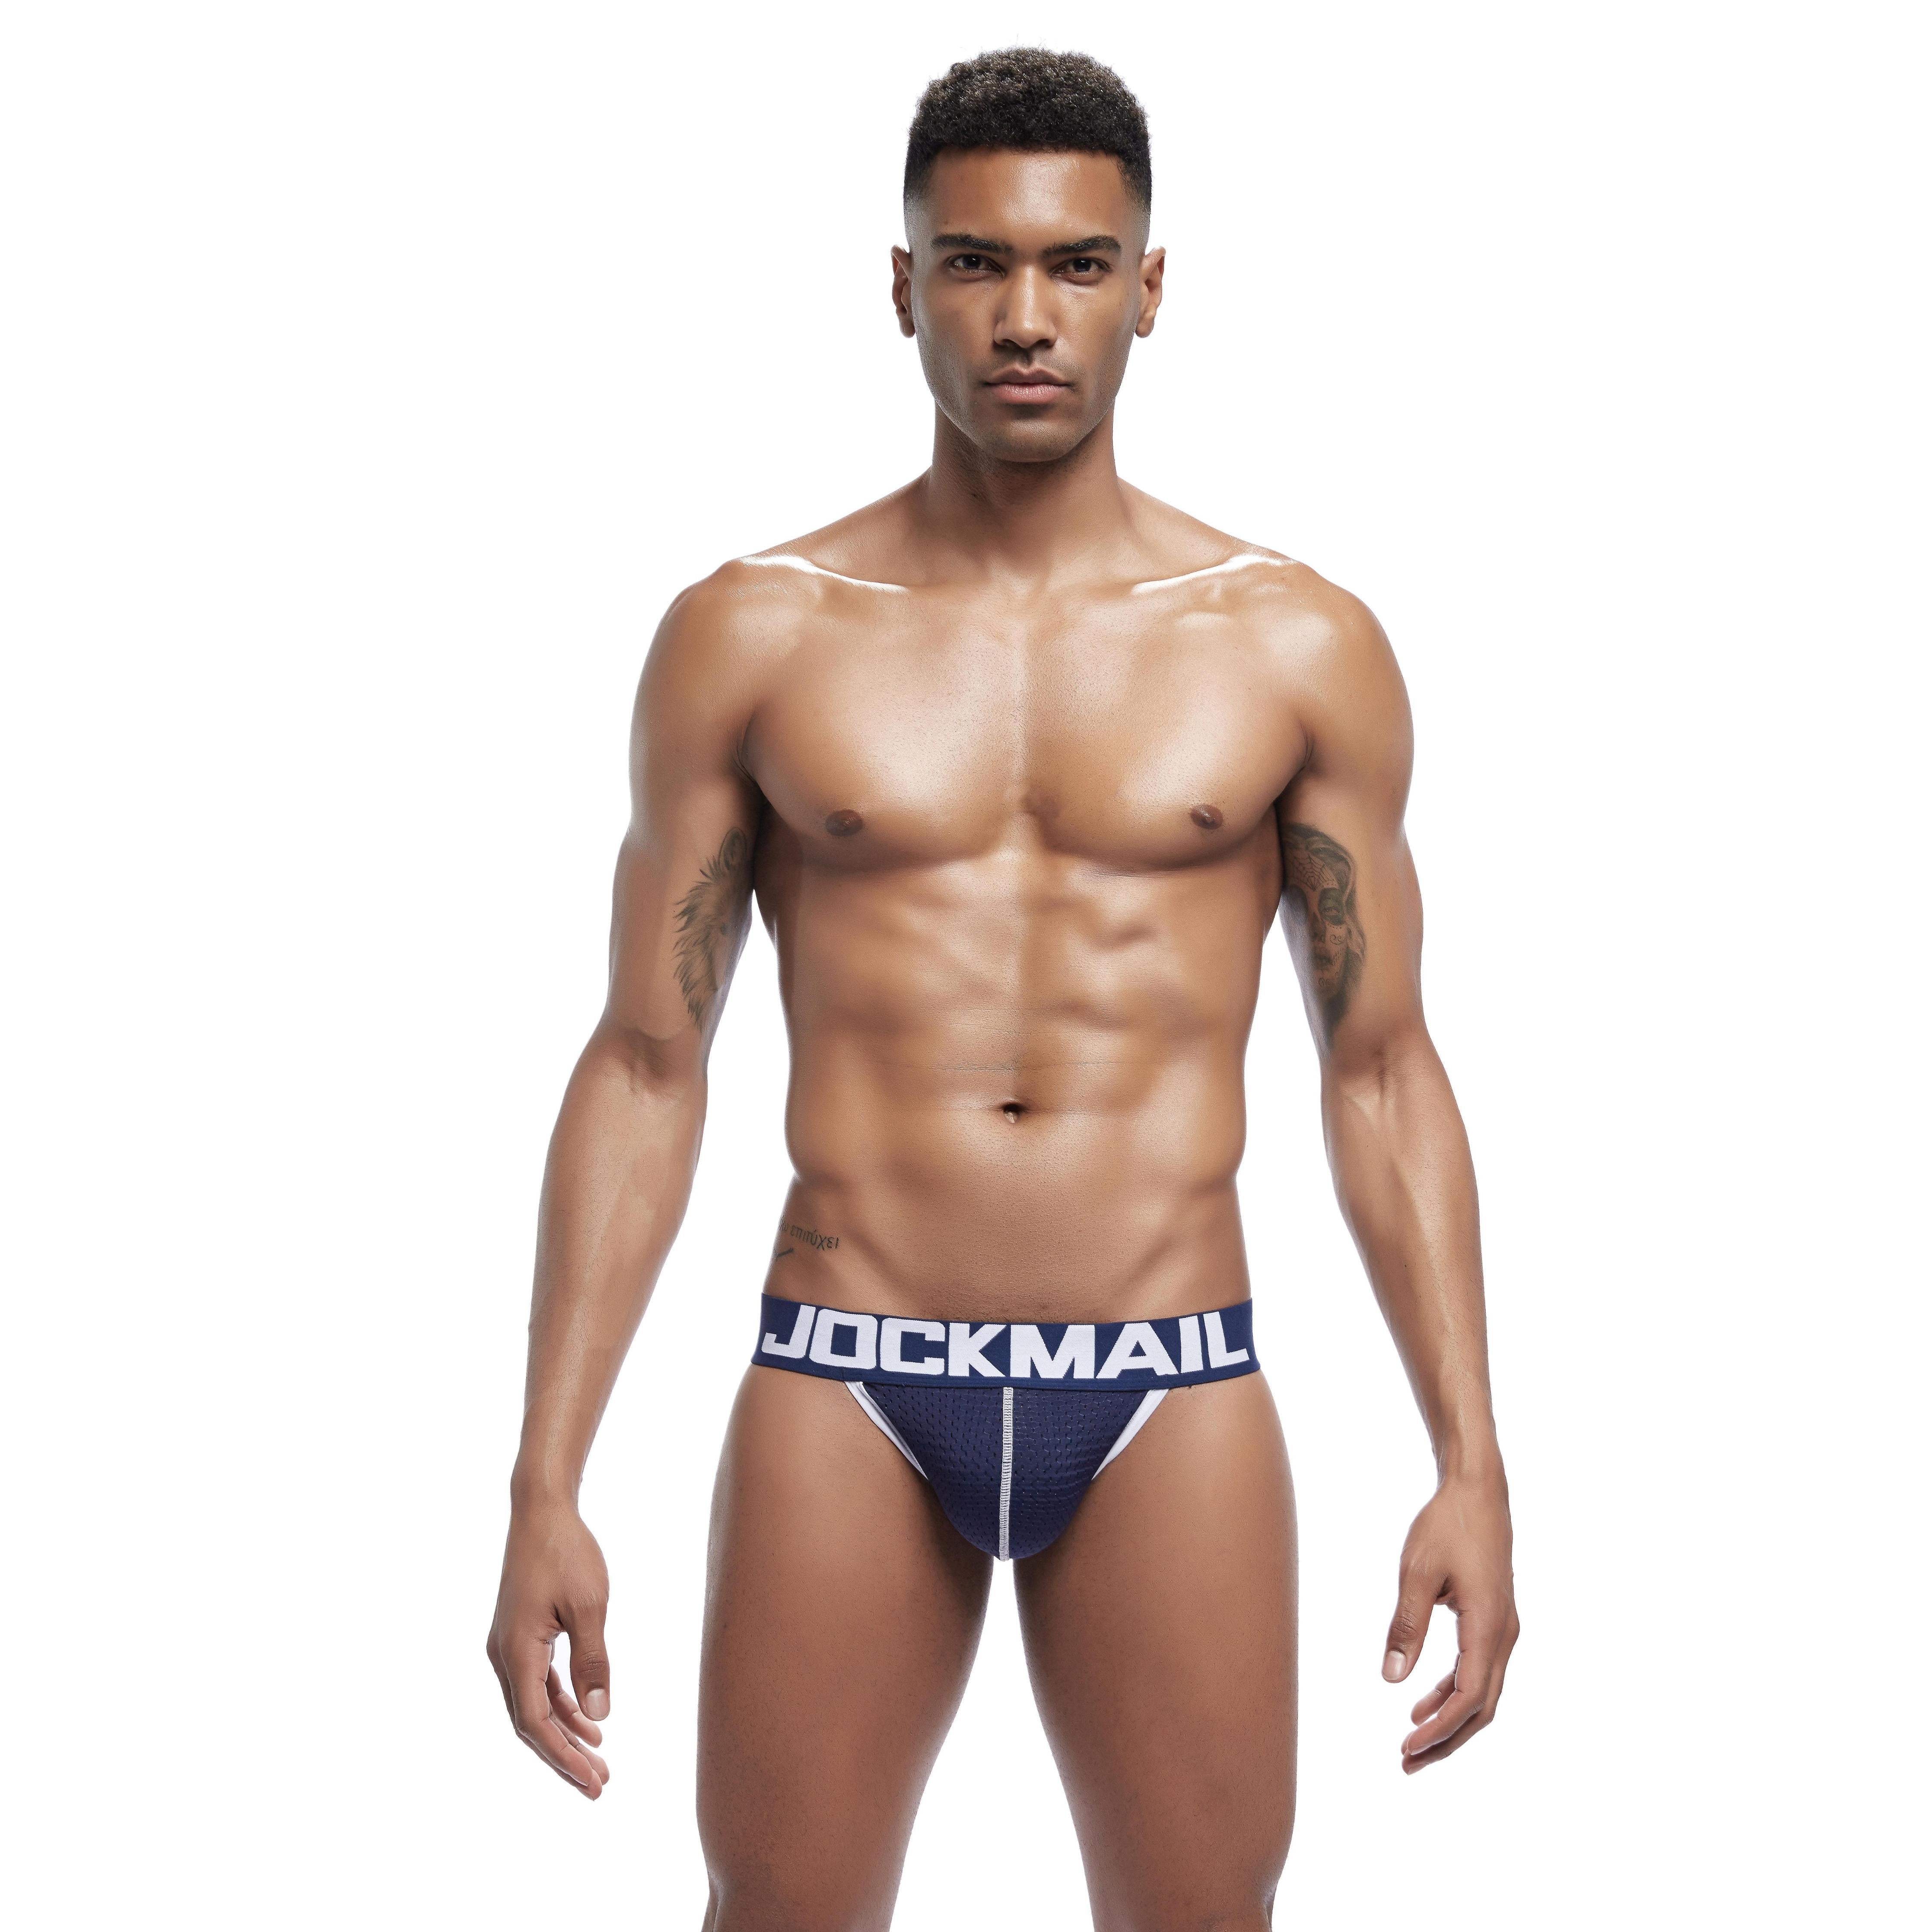 JOCKMAIL Men's Underwear Thong Jockstrap Breathable Mesh Jock Strap Homme  Slip